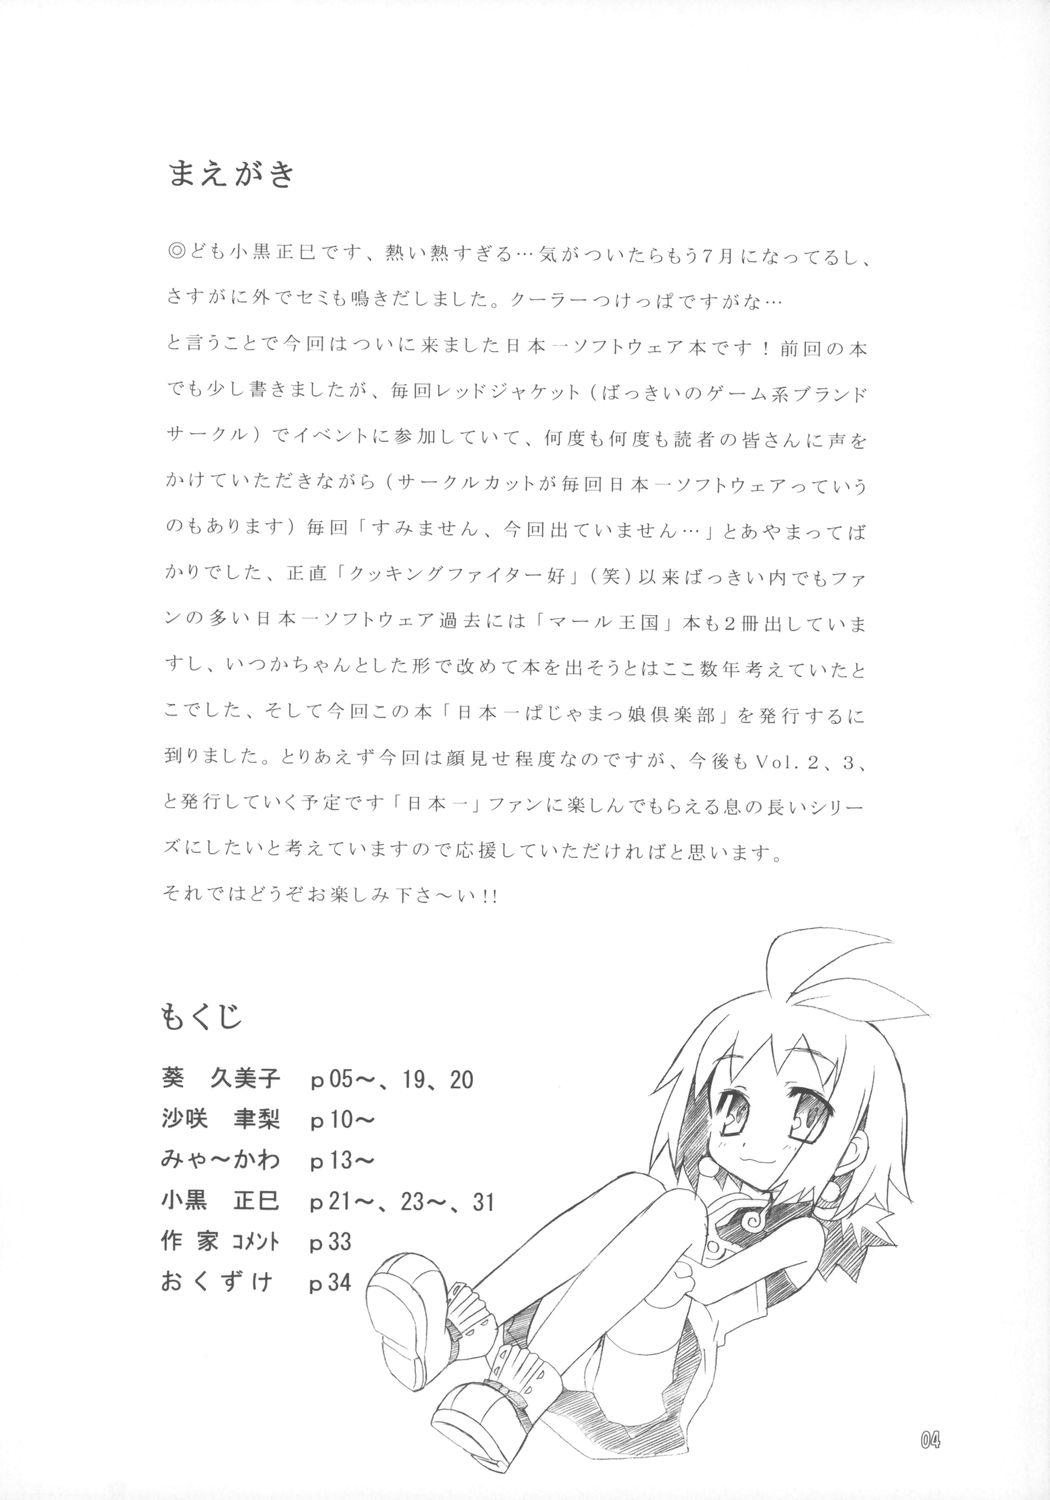 Emo Nipponichi Pajamakko Club - Disgaea La pucelle Puppet princess of marl kingdom Phantom brave Slut - Page 3